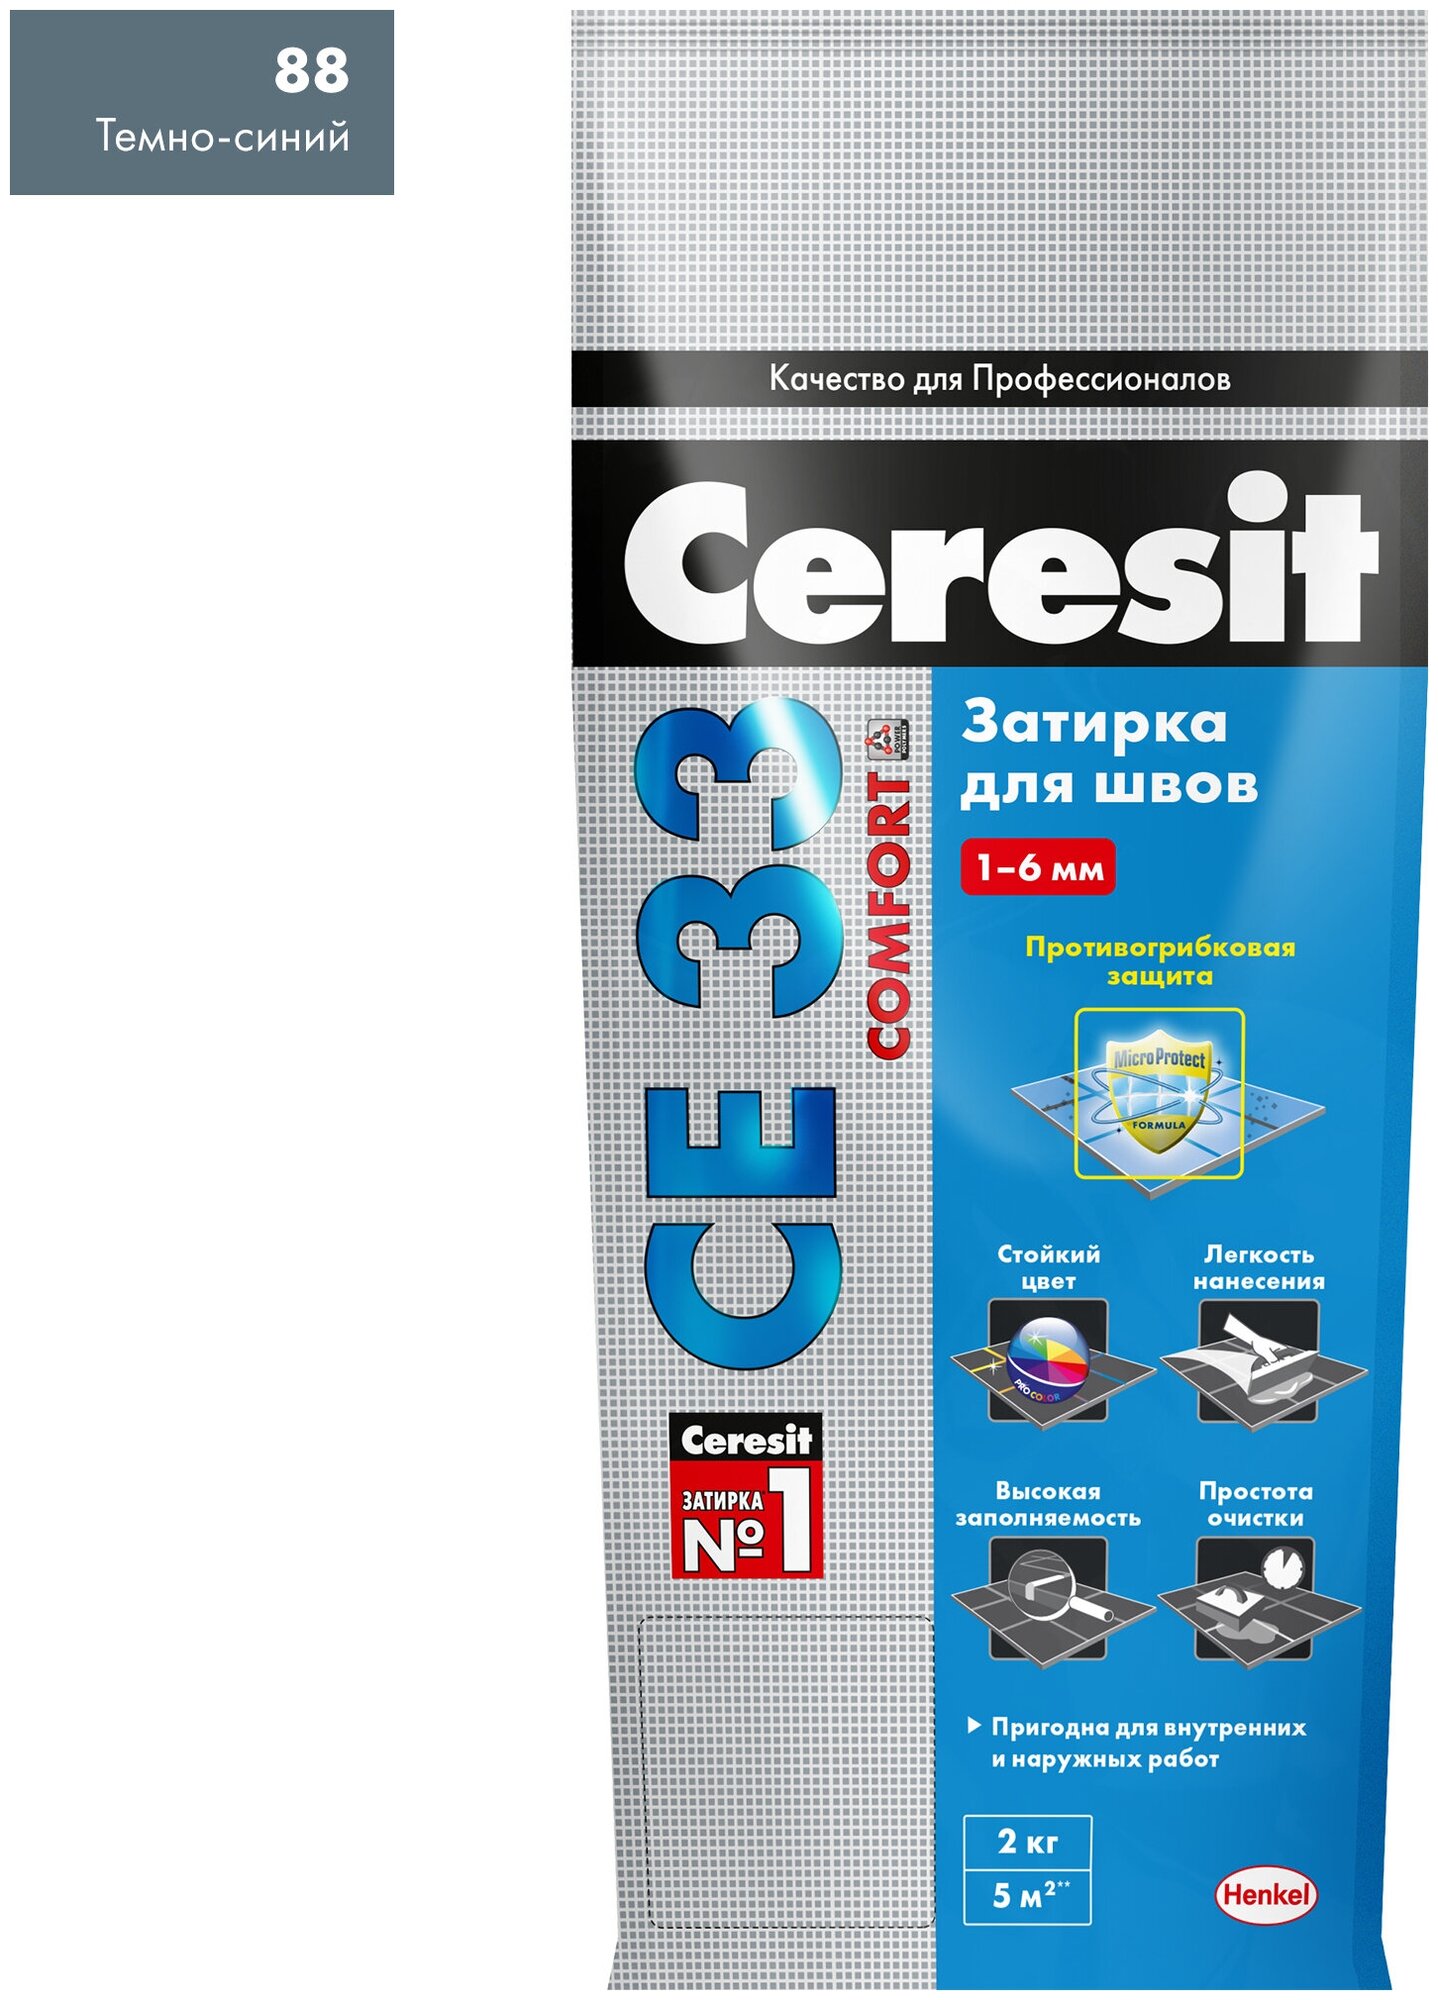 Затирка Ceresit CE 33 Comfort №88, темно-синяя, 2 кг